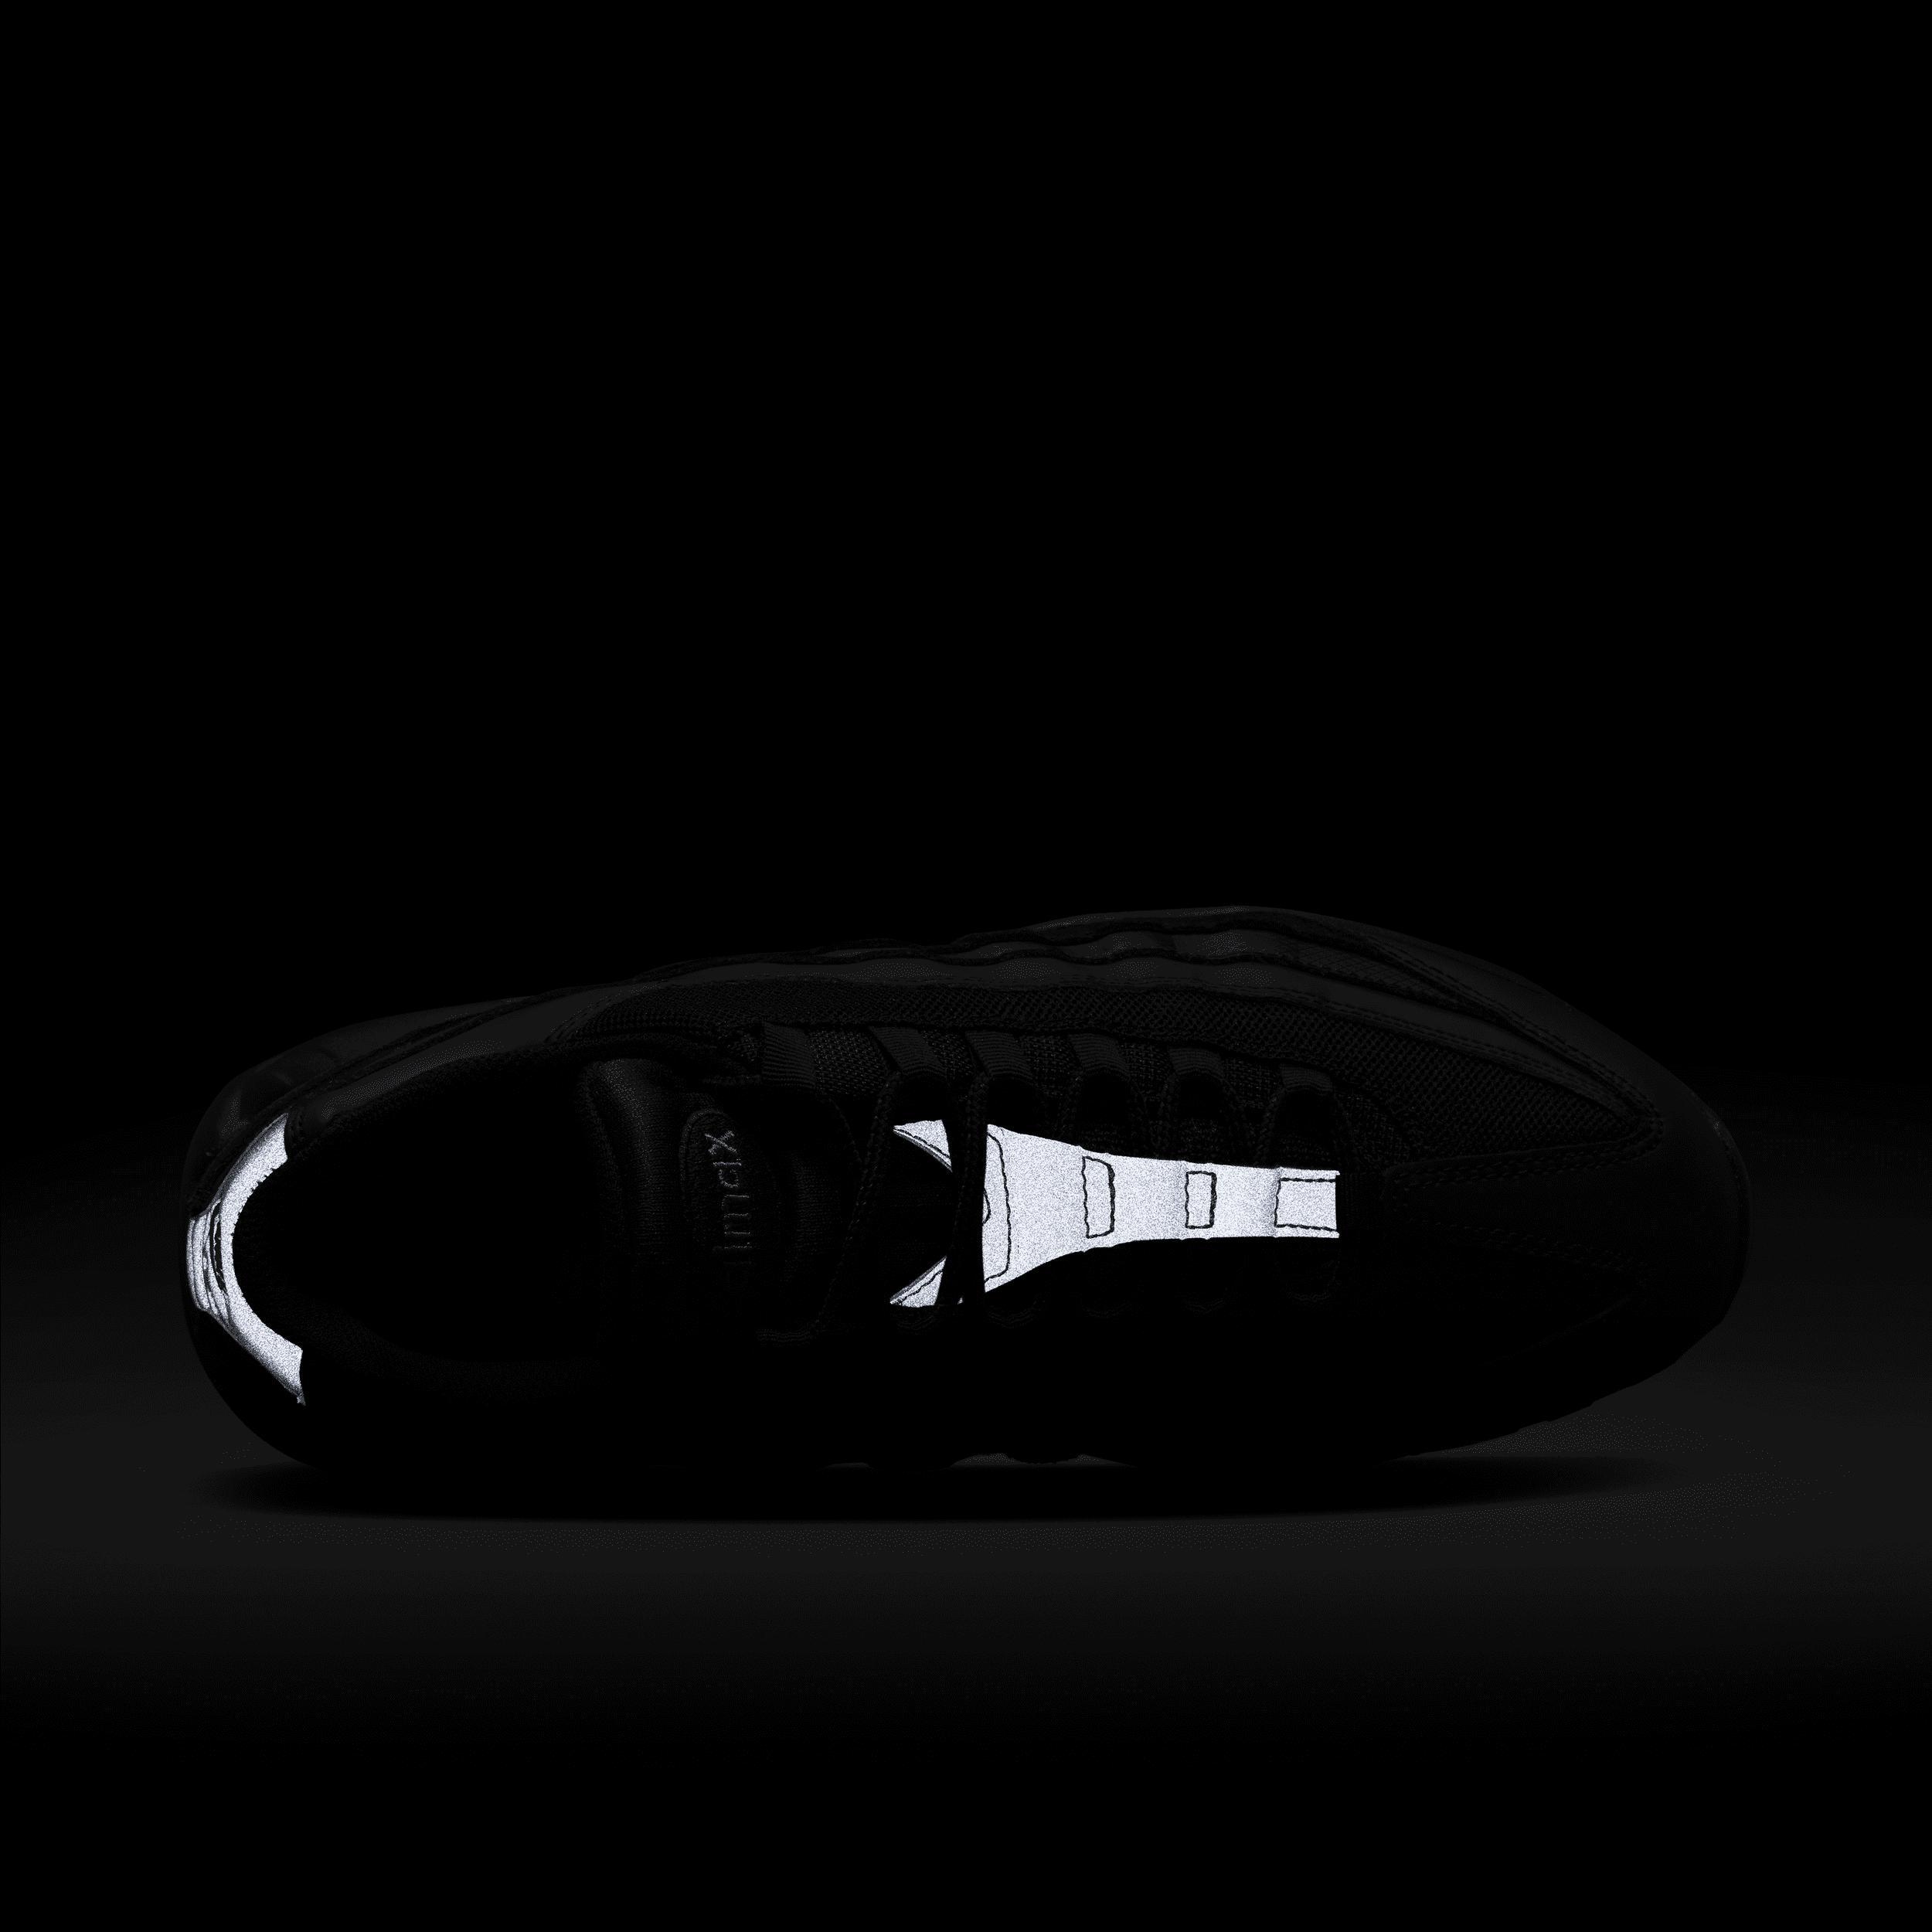 Nike Mens Nike Air Max 95 - Mens Running Shoes Black/Black/Dark Grey Product Image